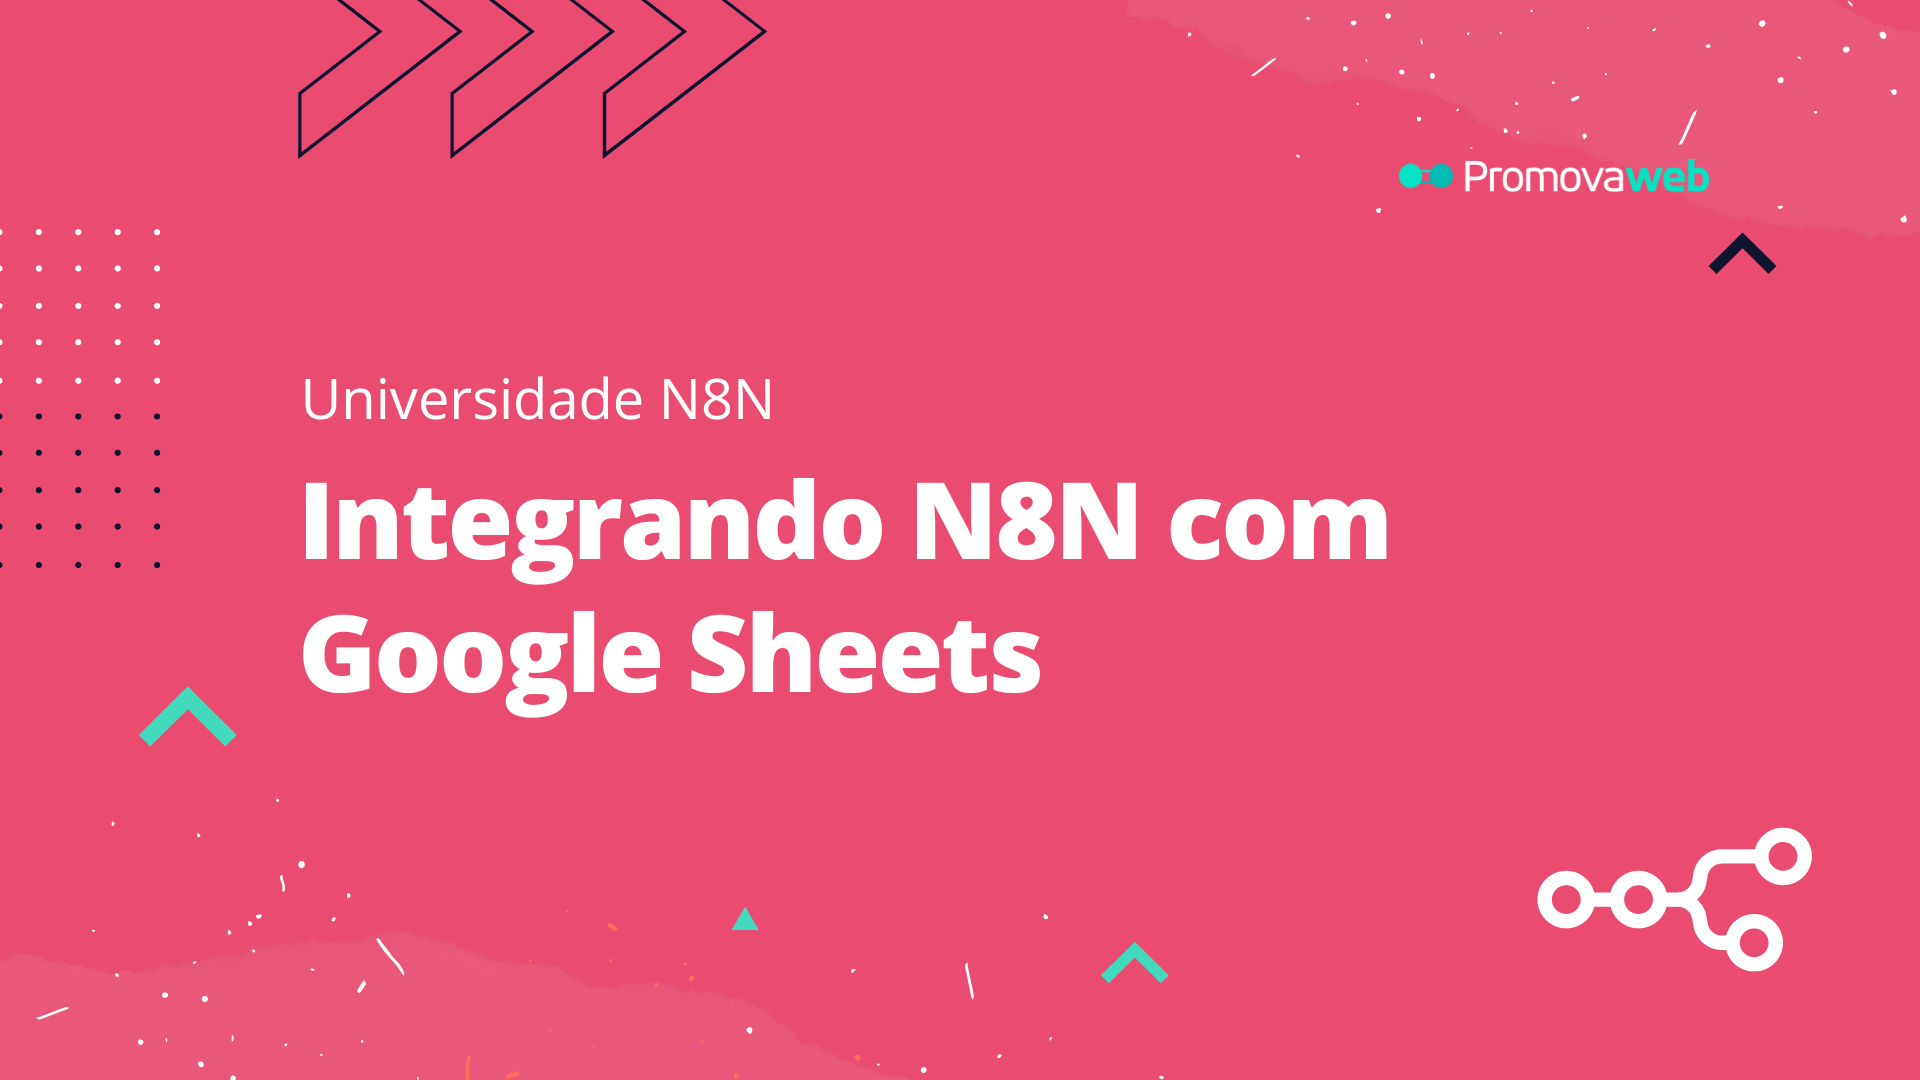 Integrando N8N com Google Sheets